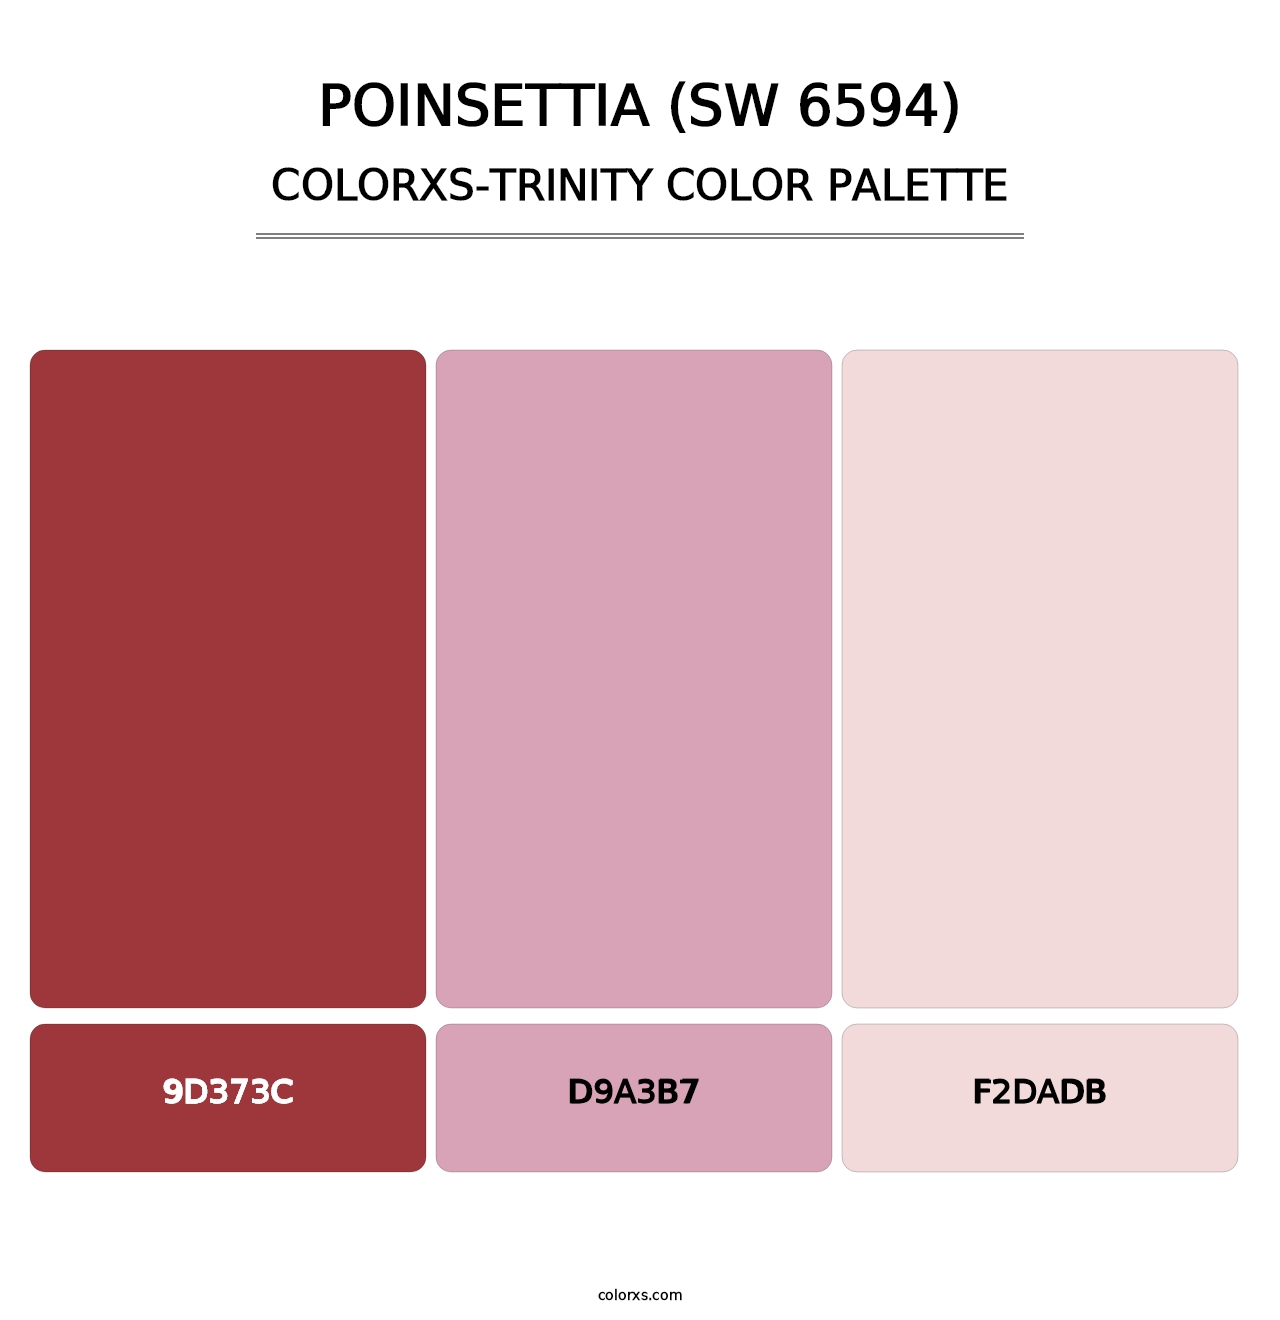 Poinsettia (SW 6594) - Colorxs Trinity Palette